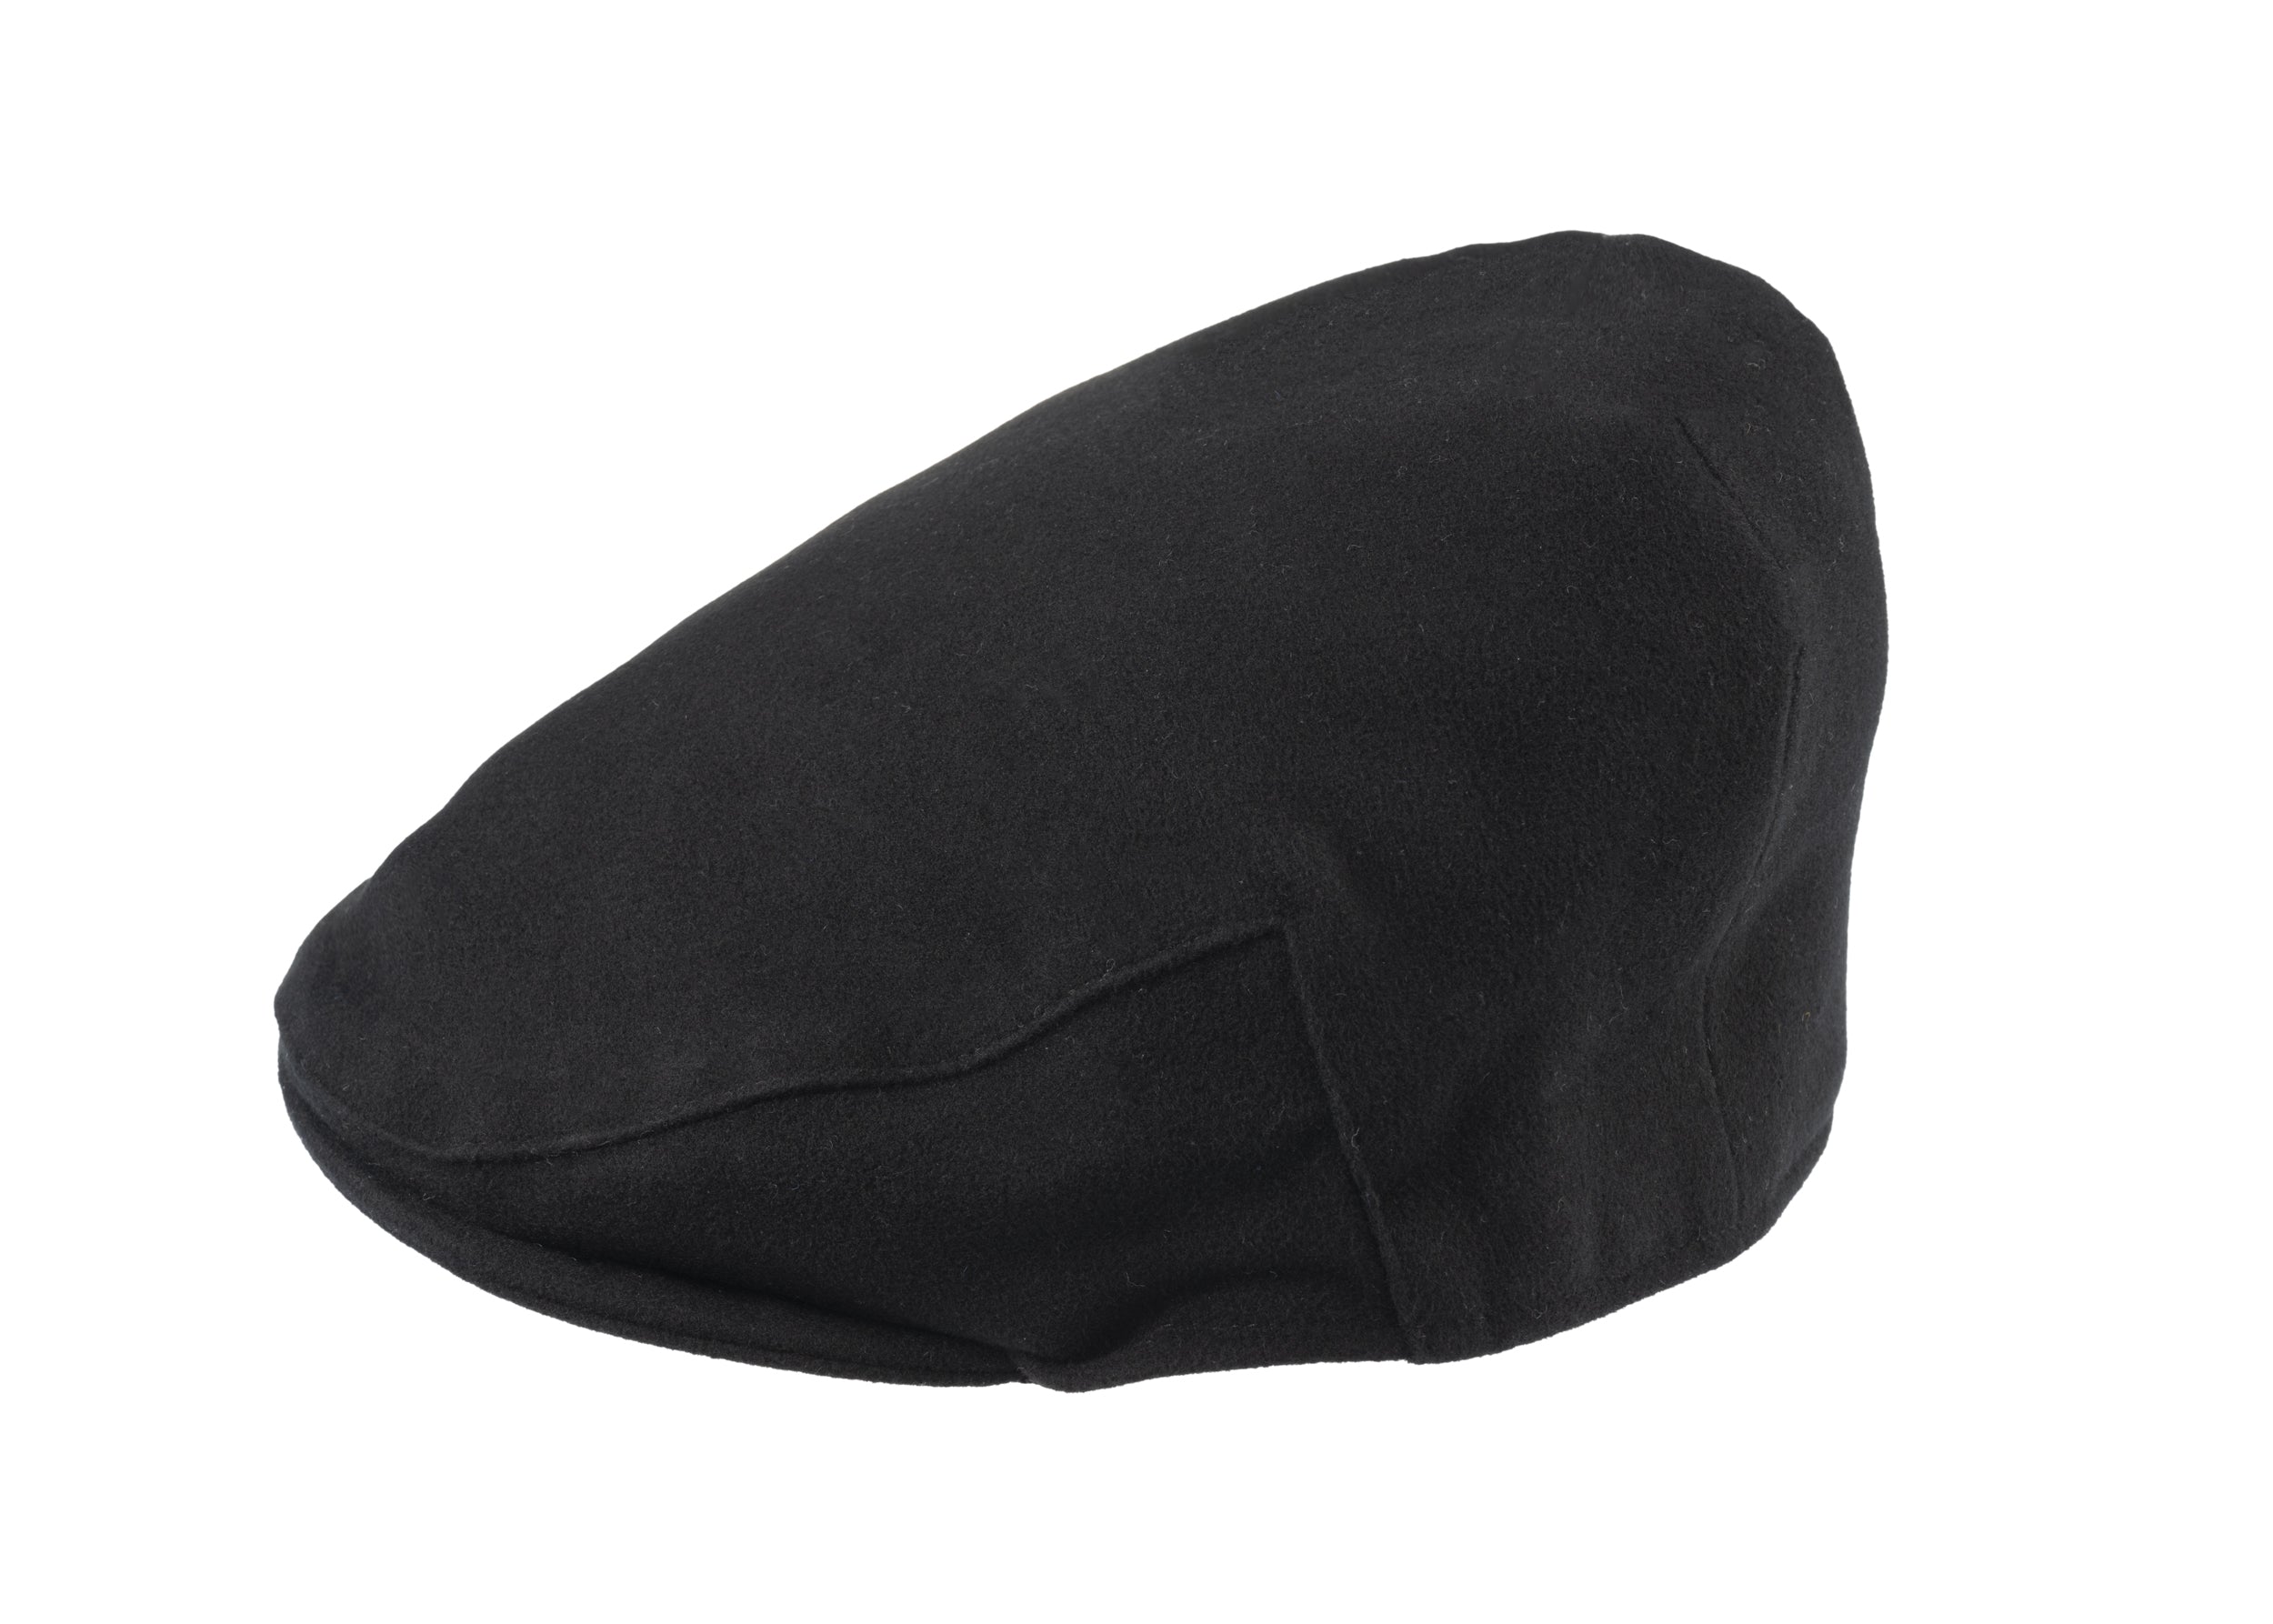 Balmoral moleskin cotton cap in Black